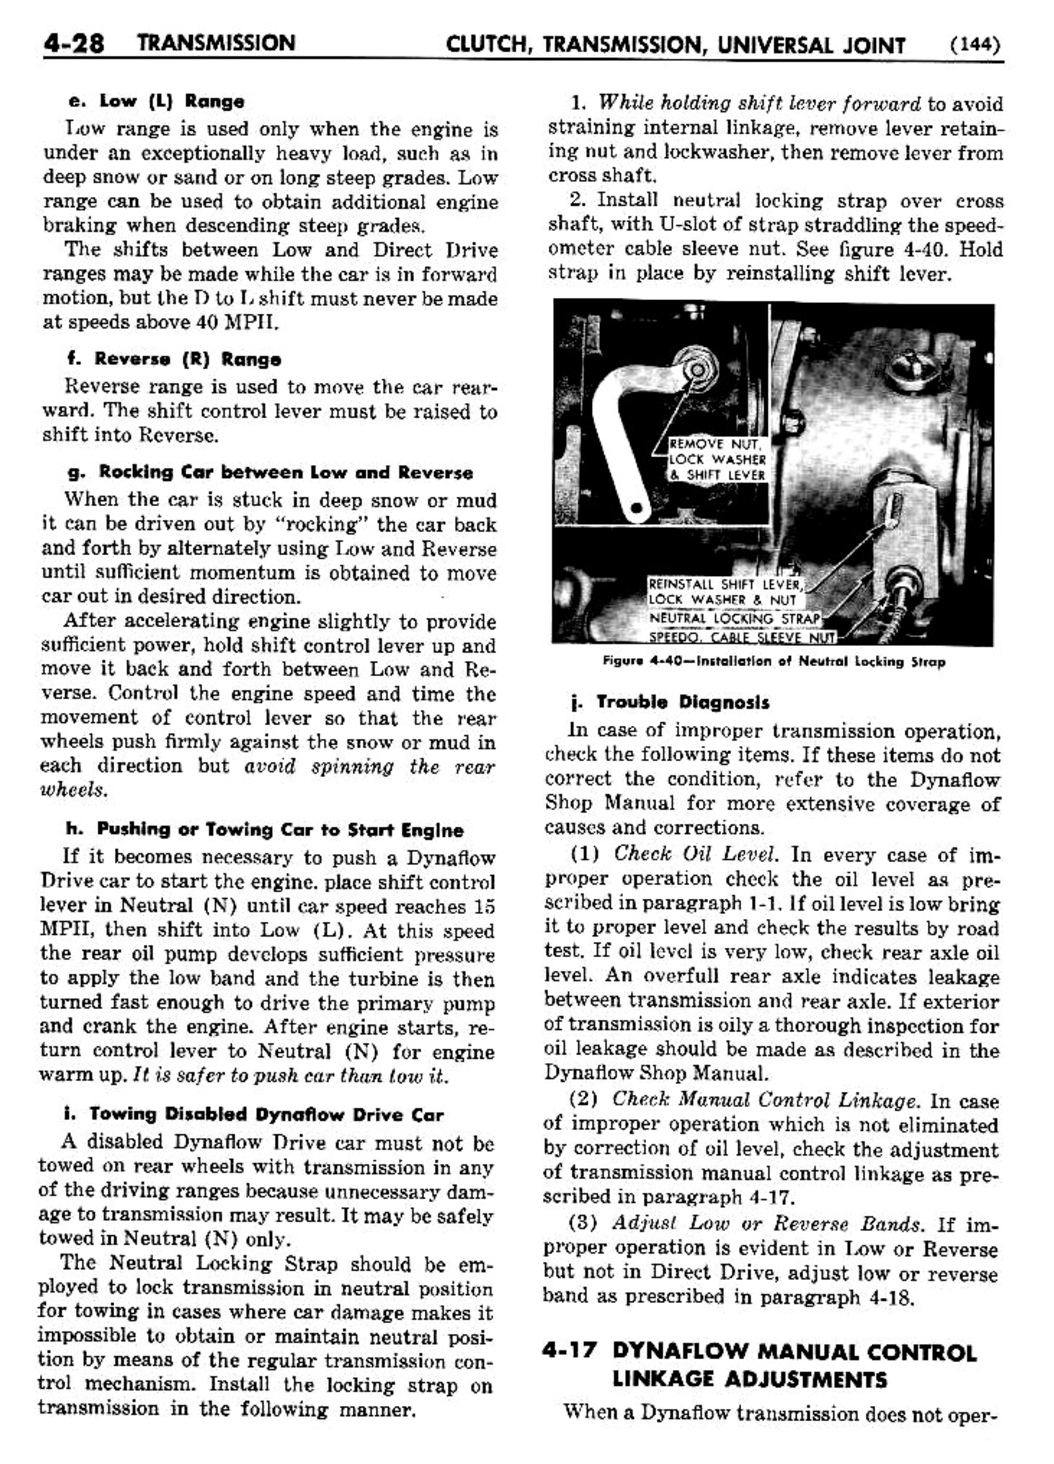 n_05 1950 Buick Shop Manual - Transmission-028-028.jpg